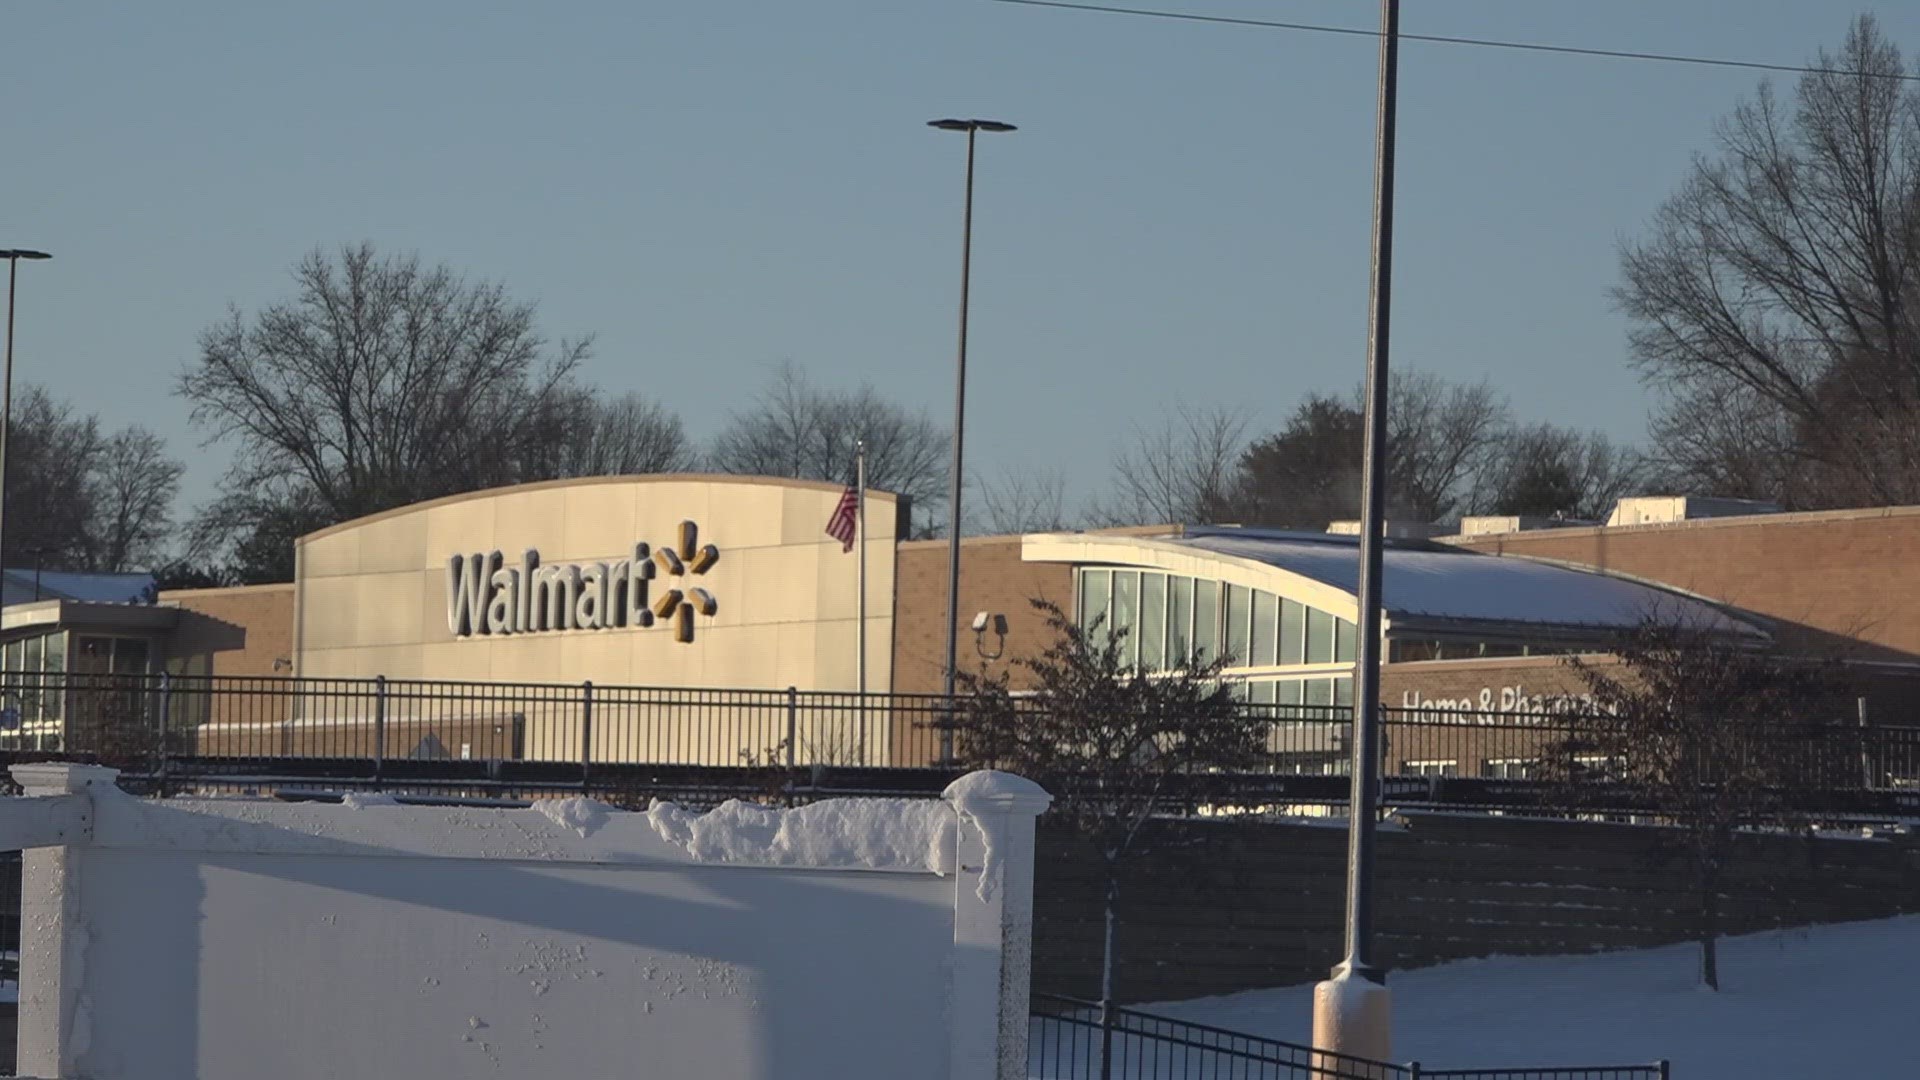 Police said a Walmart employee who shot the victim was taken into custody.